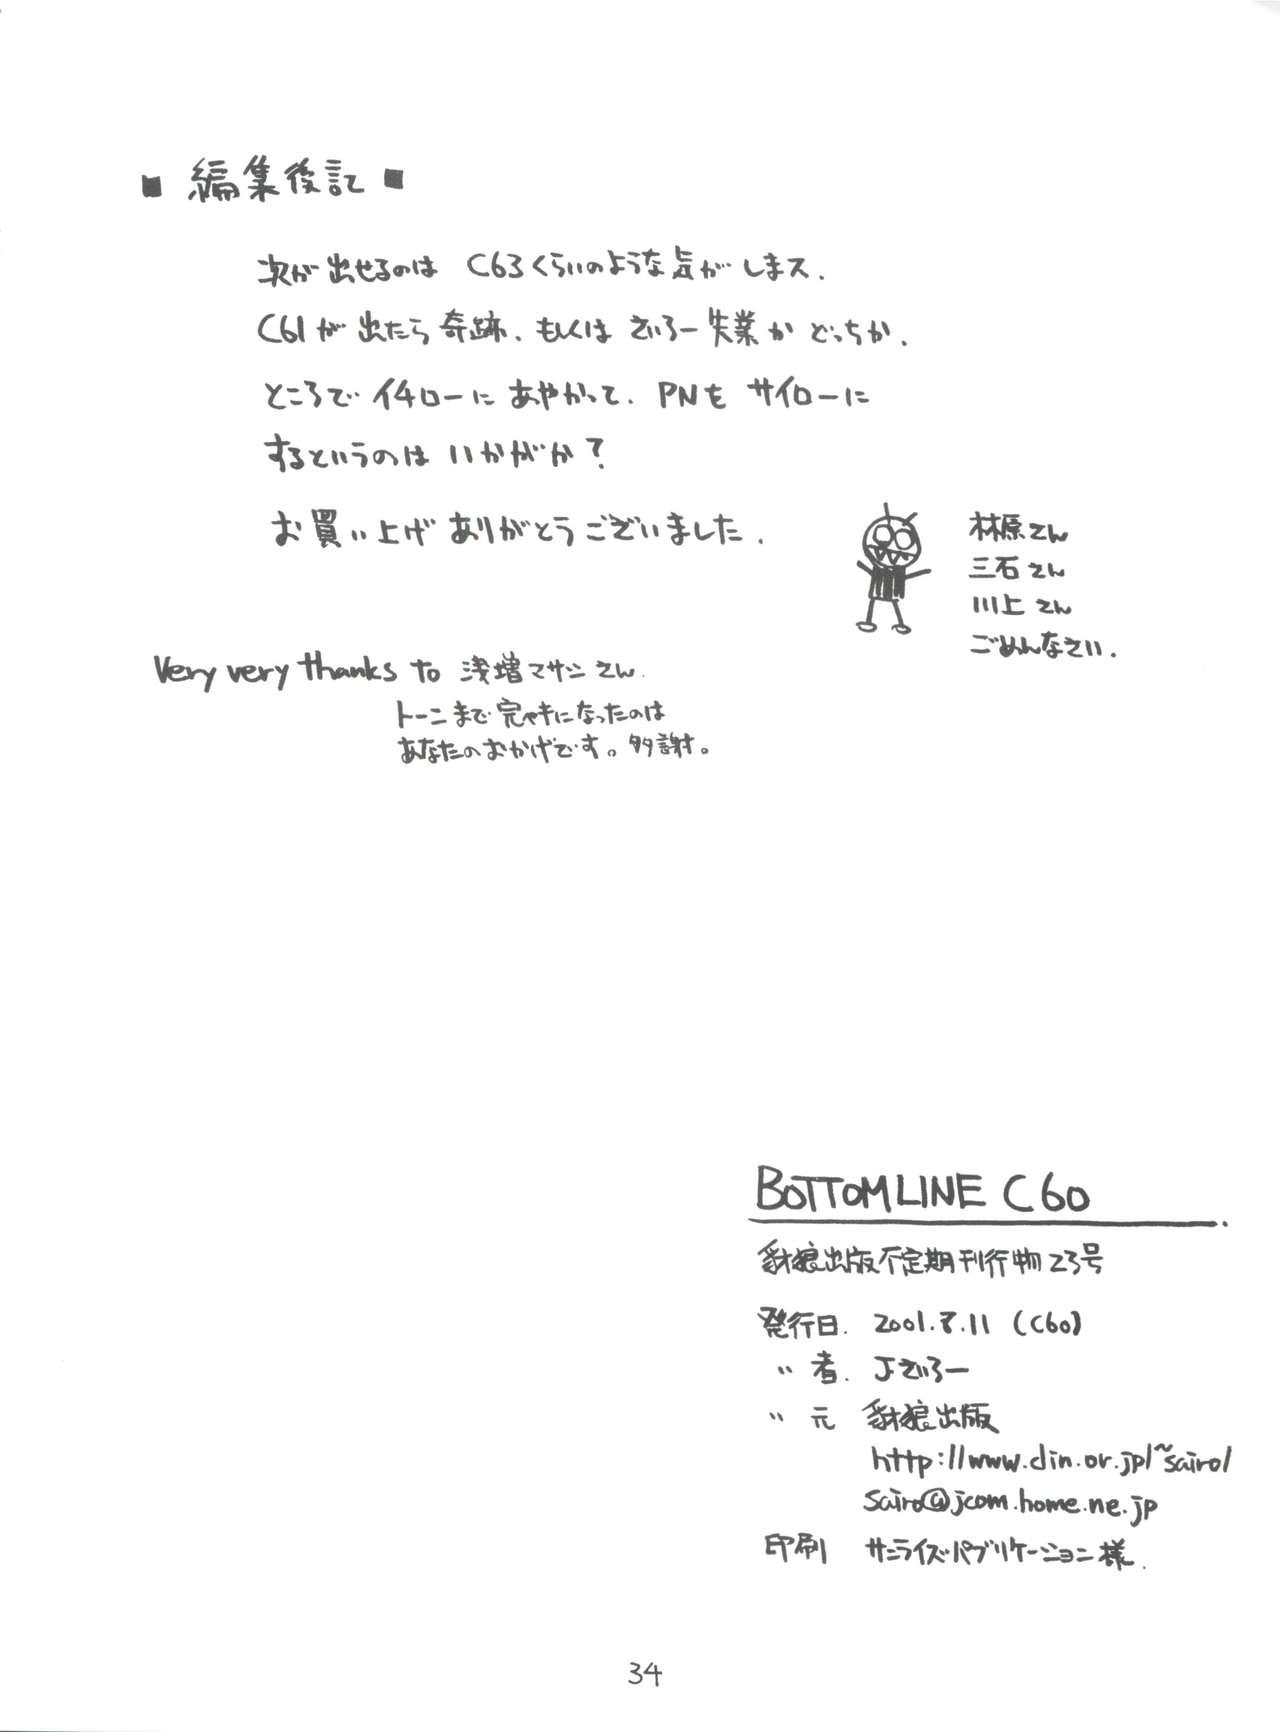 Desperate Bottomline C60 - Slayers Gakkou no kaidan Chupada - Page 33